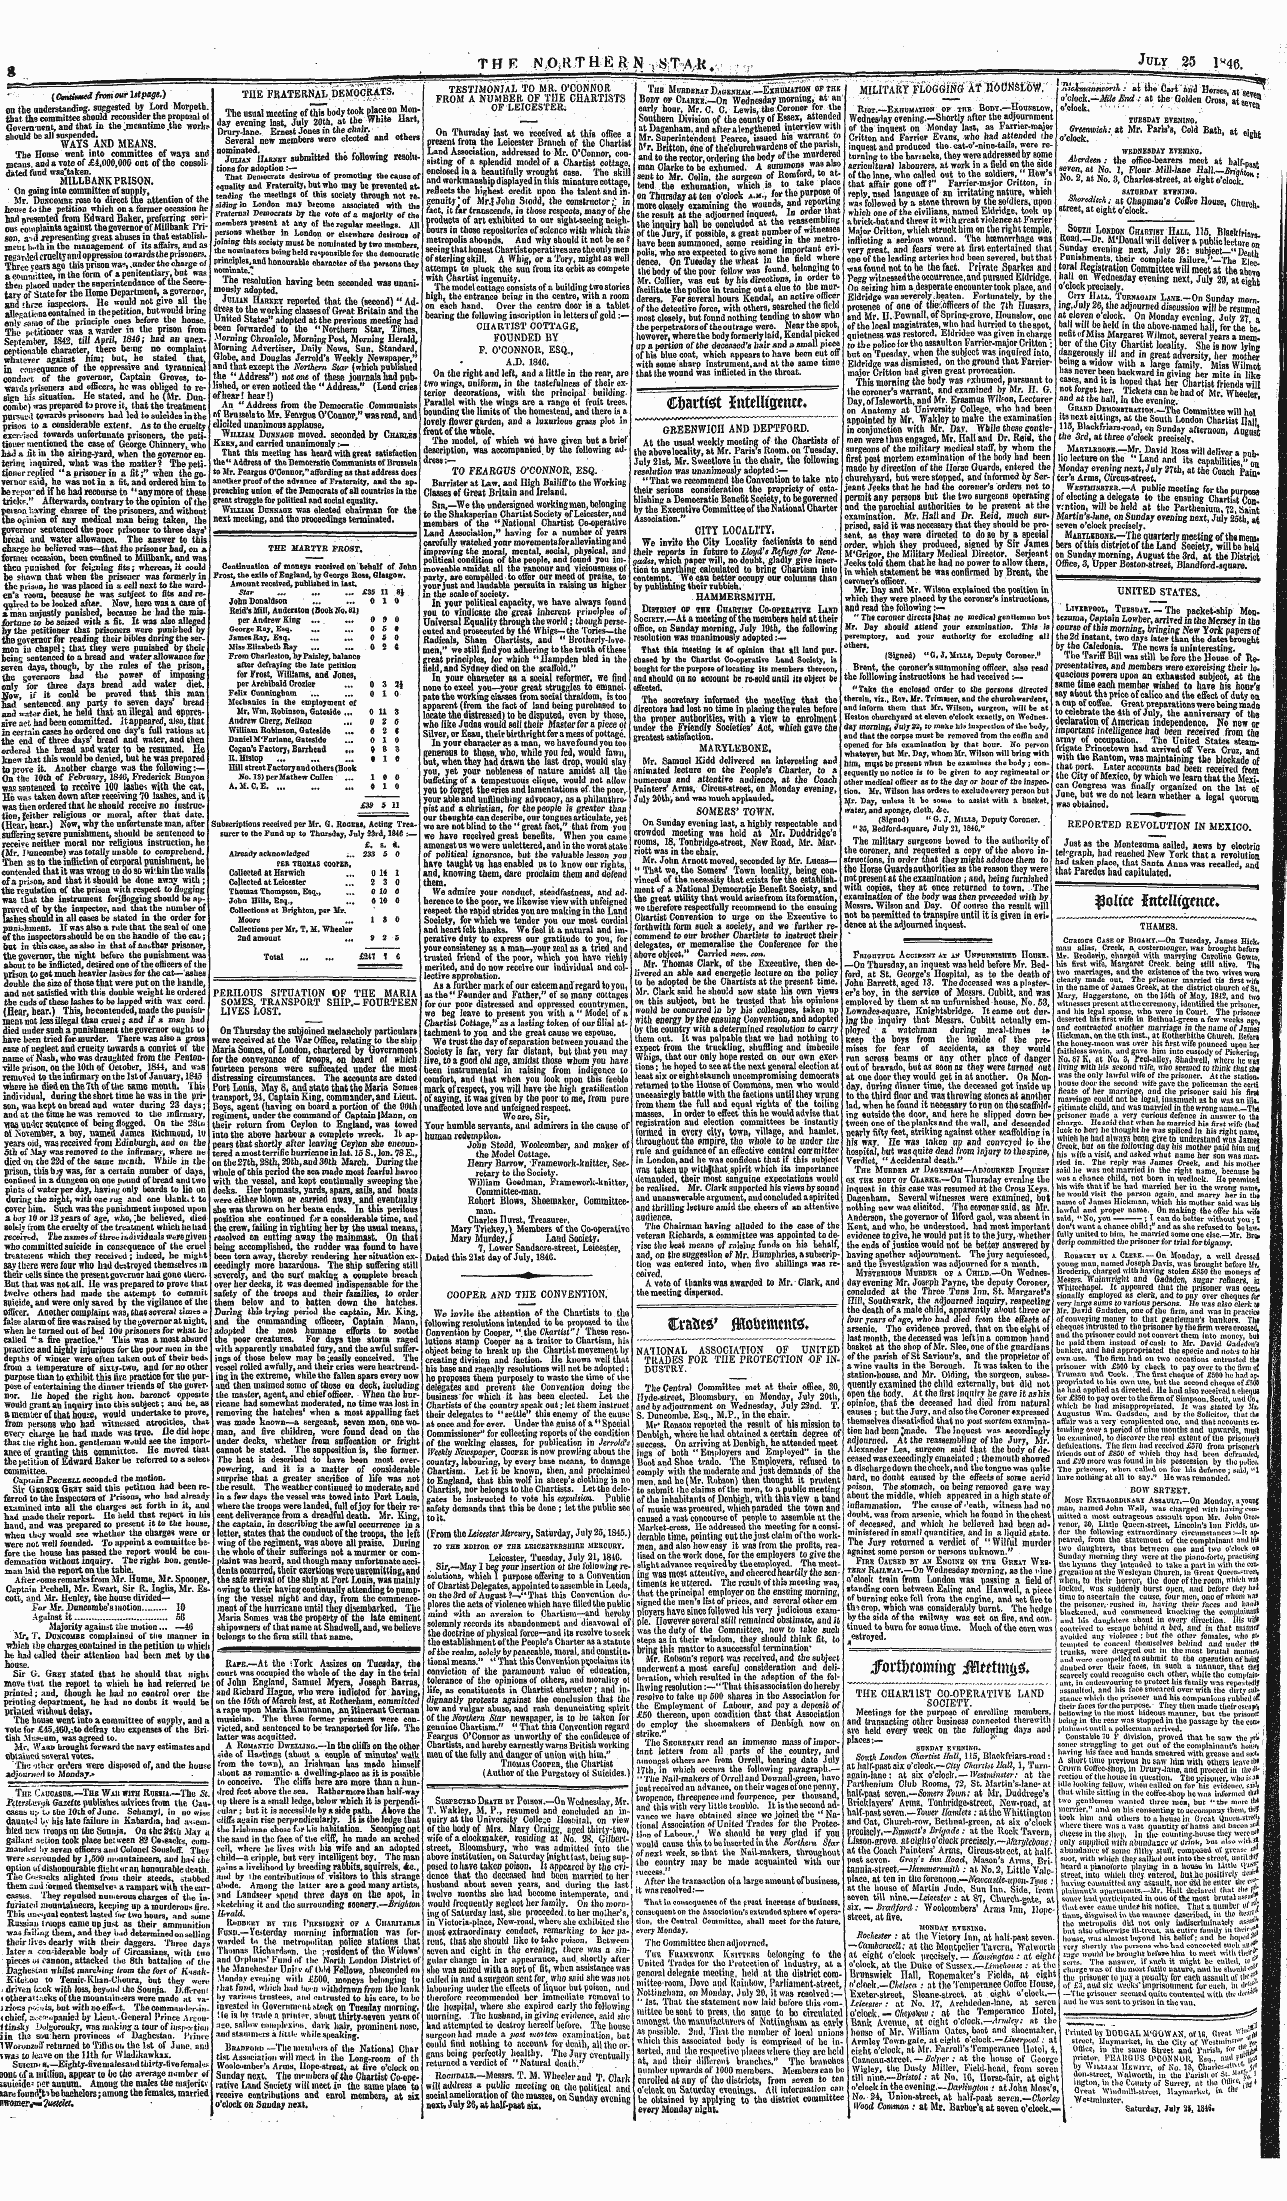 Northern Star (1837-1852): jS F Y, 3rd edition - Mjha/